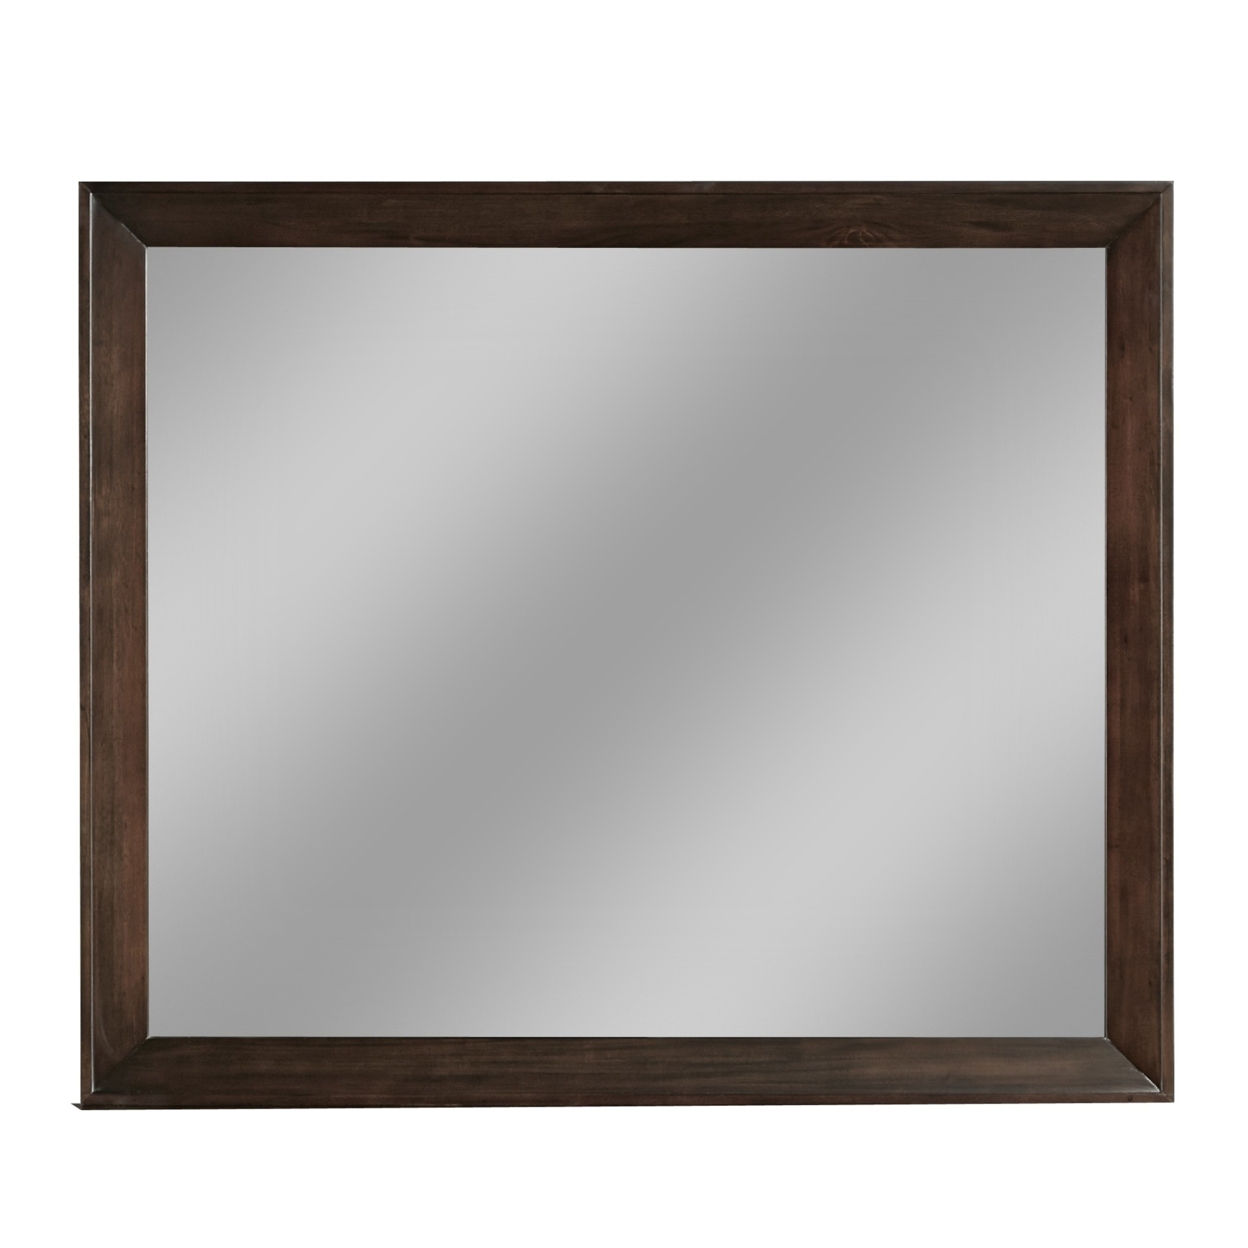 Steve 51 Inch Modern Rectangular Wall Mirror, Glossy Pine Wood Frame, Brown- Saltoro Sherpi